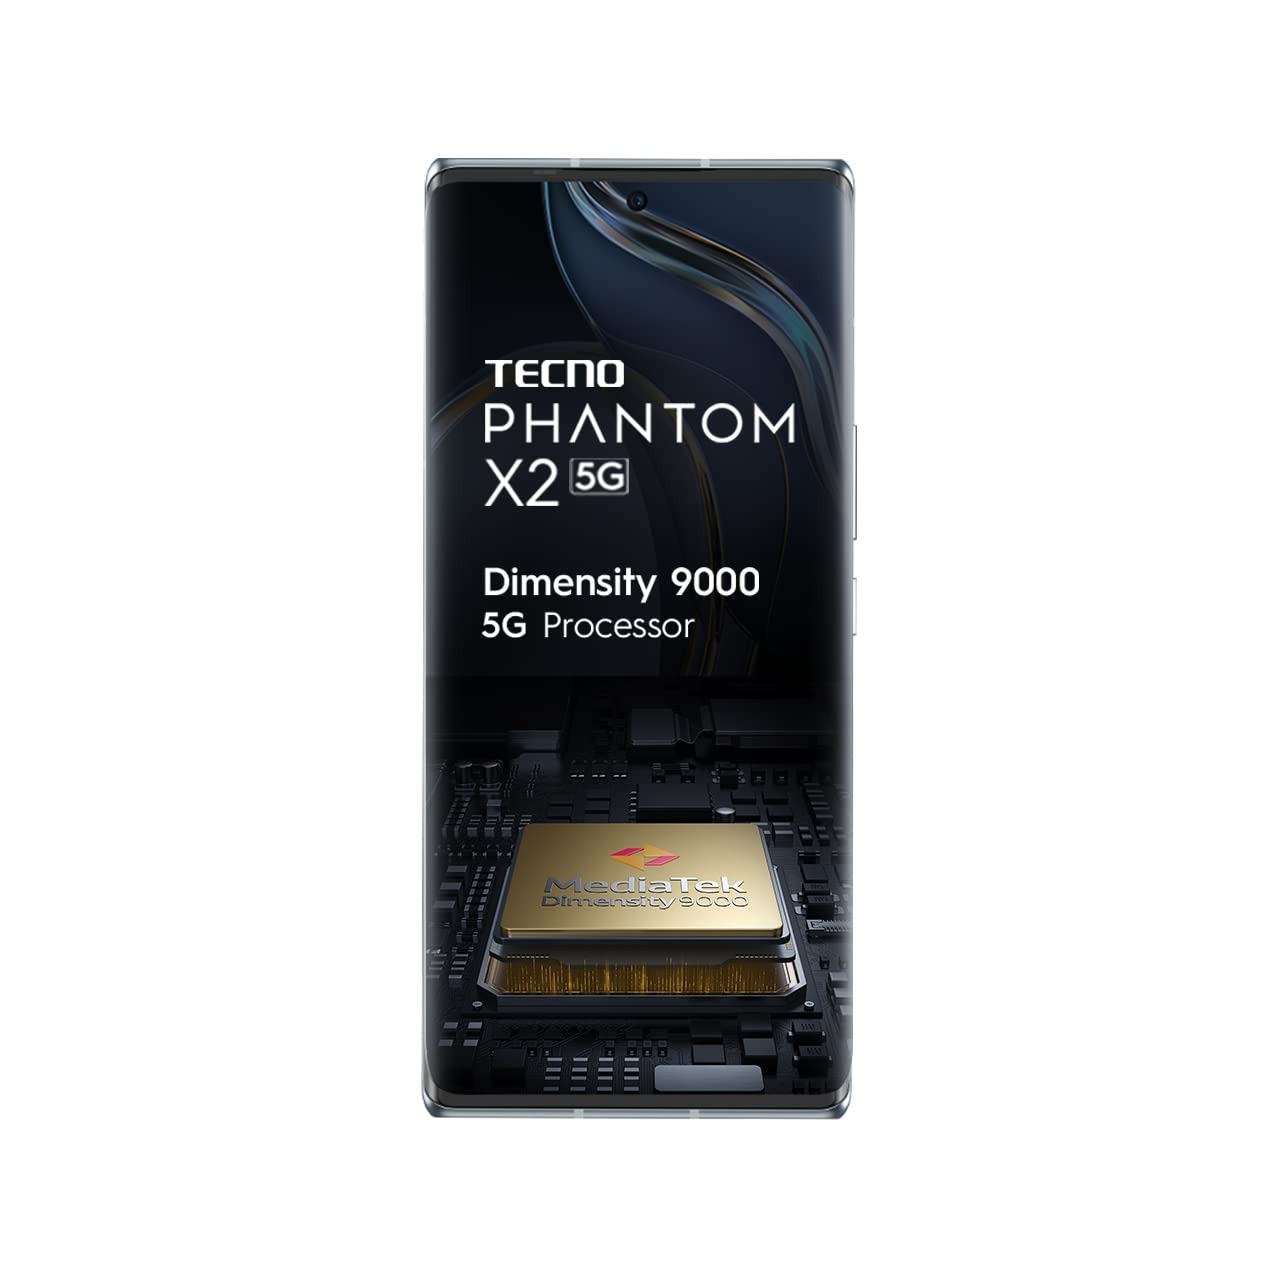 Tecno Phantom X2 5G (Stardust Grey, 256 GB)  (8 GB RAM) - moonlight silver, 8GB-256GB